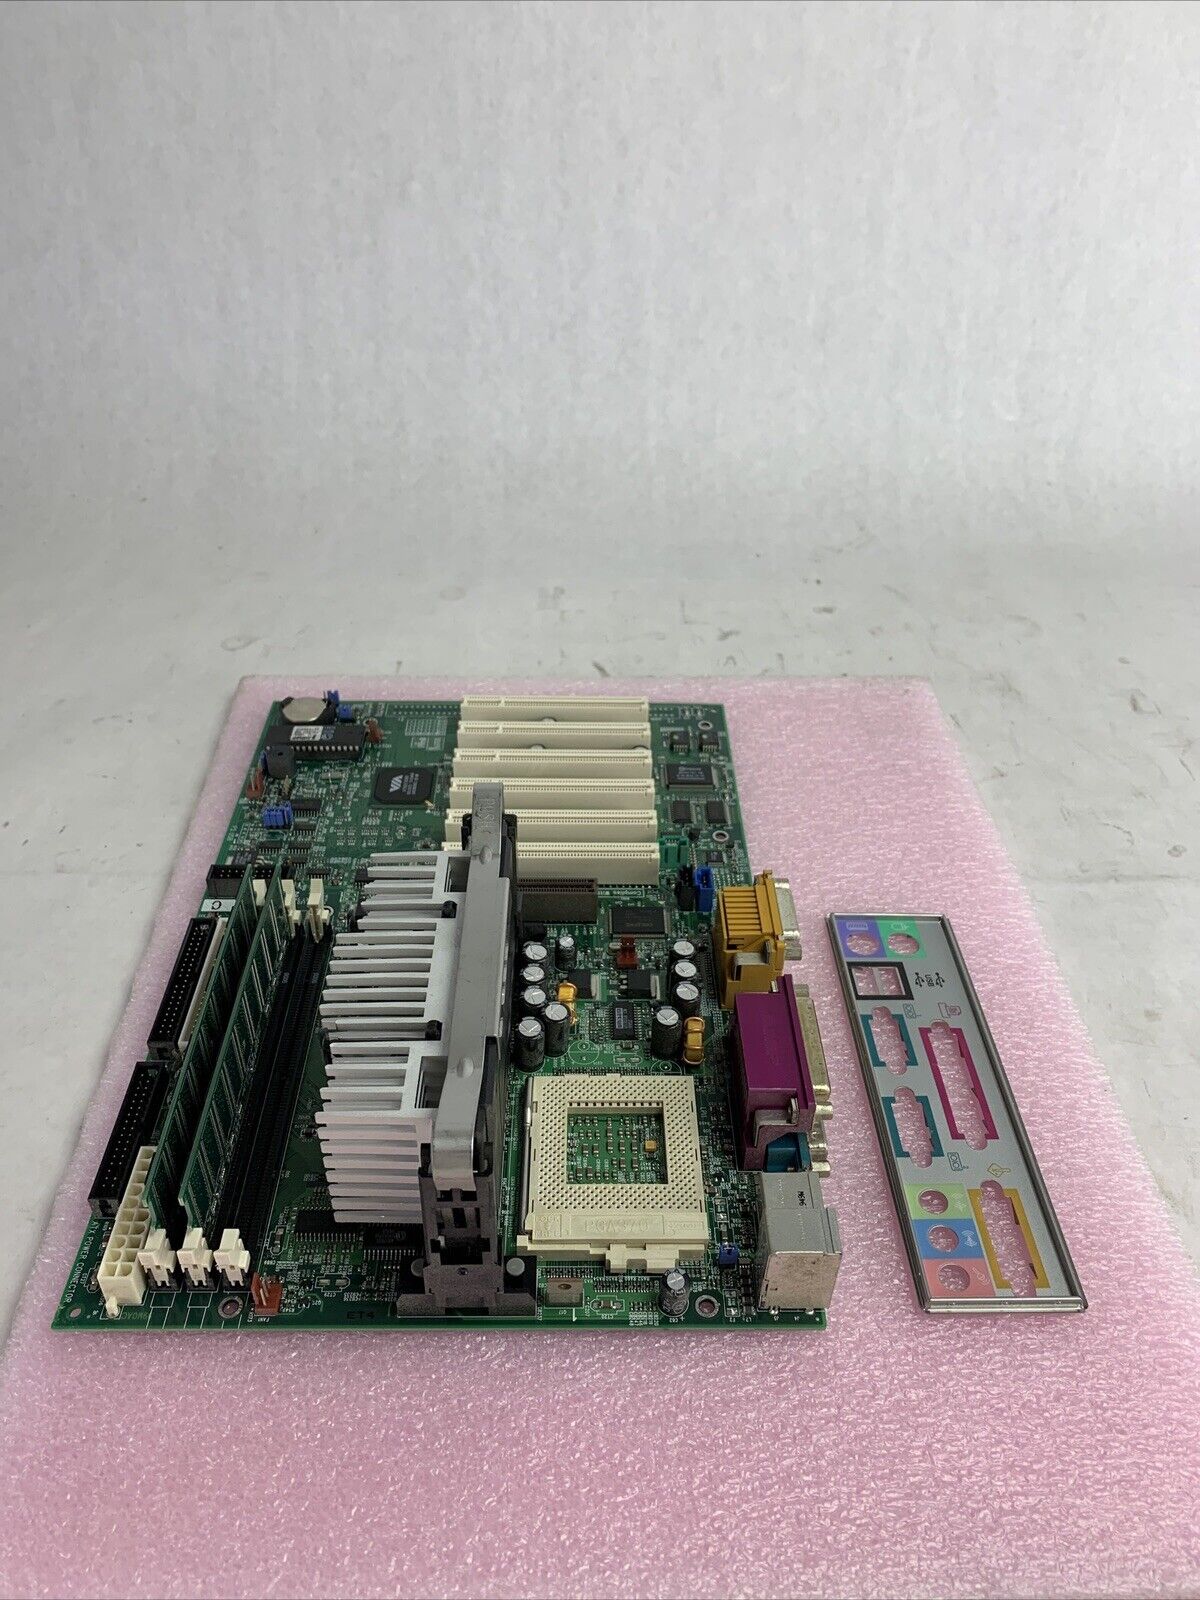 Tyan S1854 Motherboard Intel Pentium III 533MHz 128MB RAM w/ I/O Shield